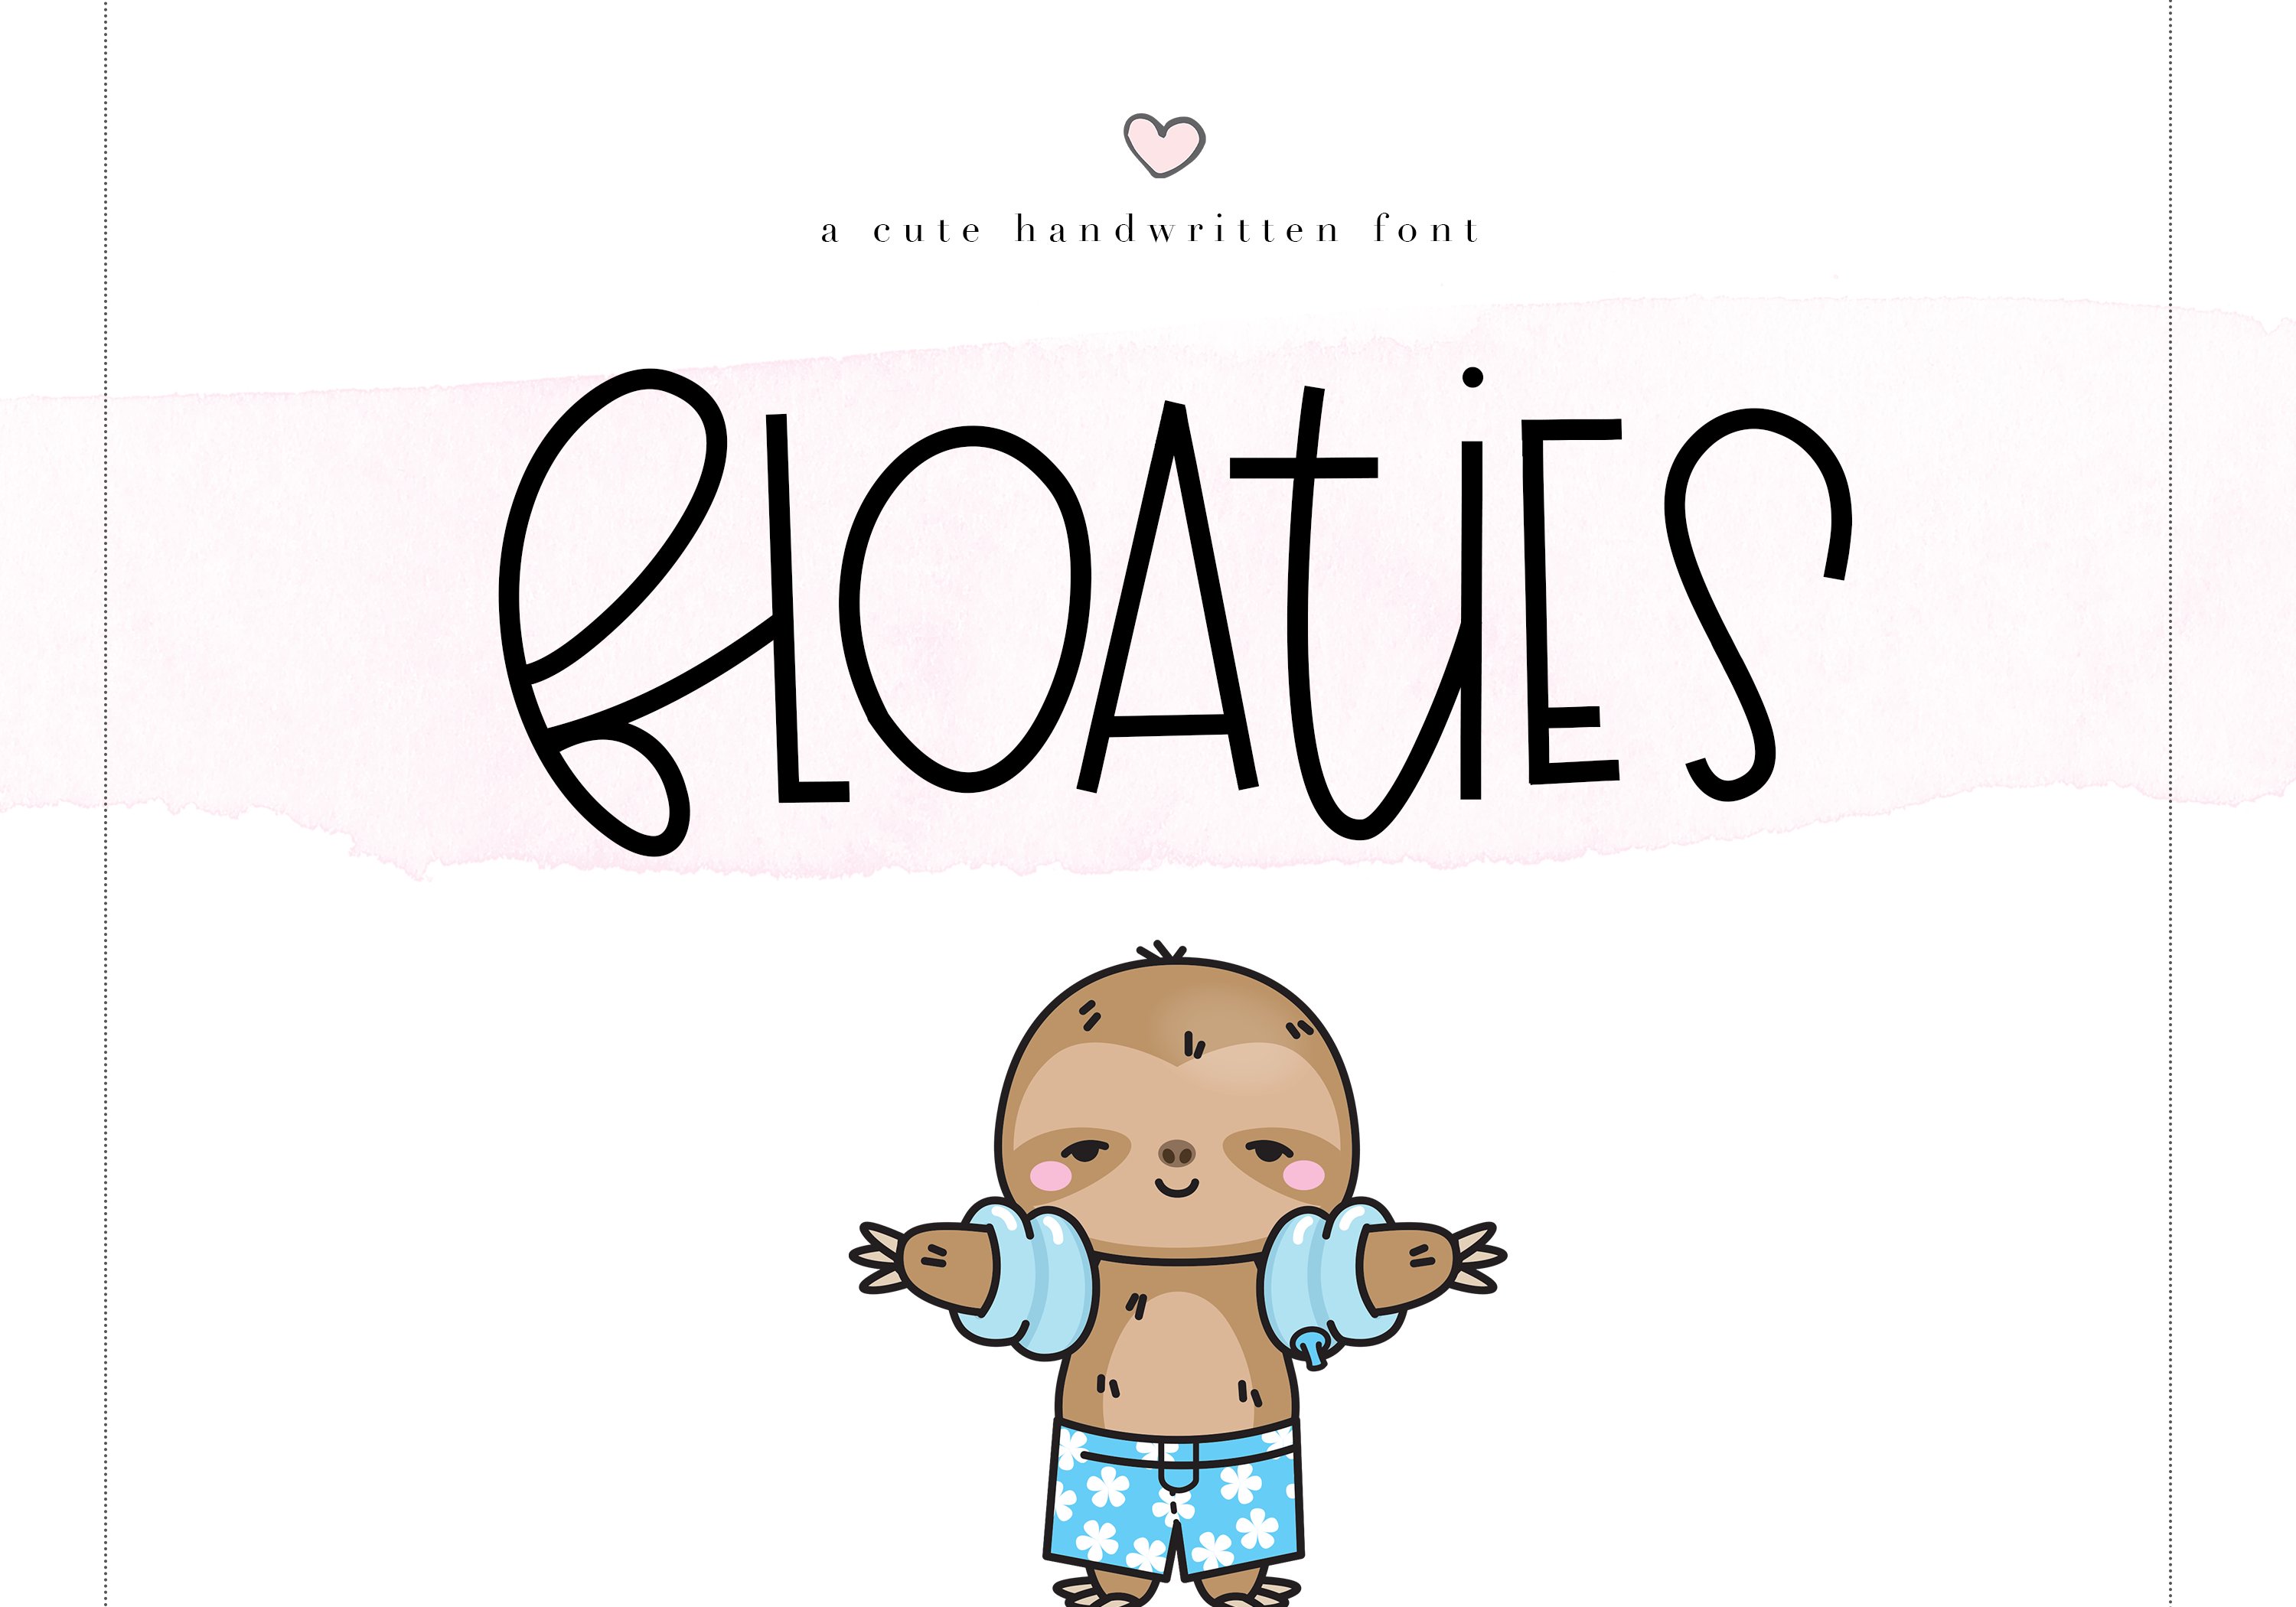 Floaties - A Cute Handwritten Font cover image.